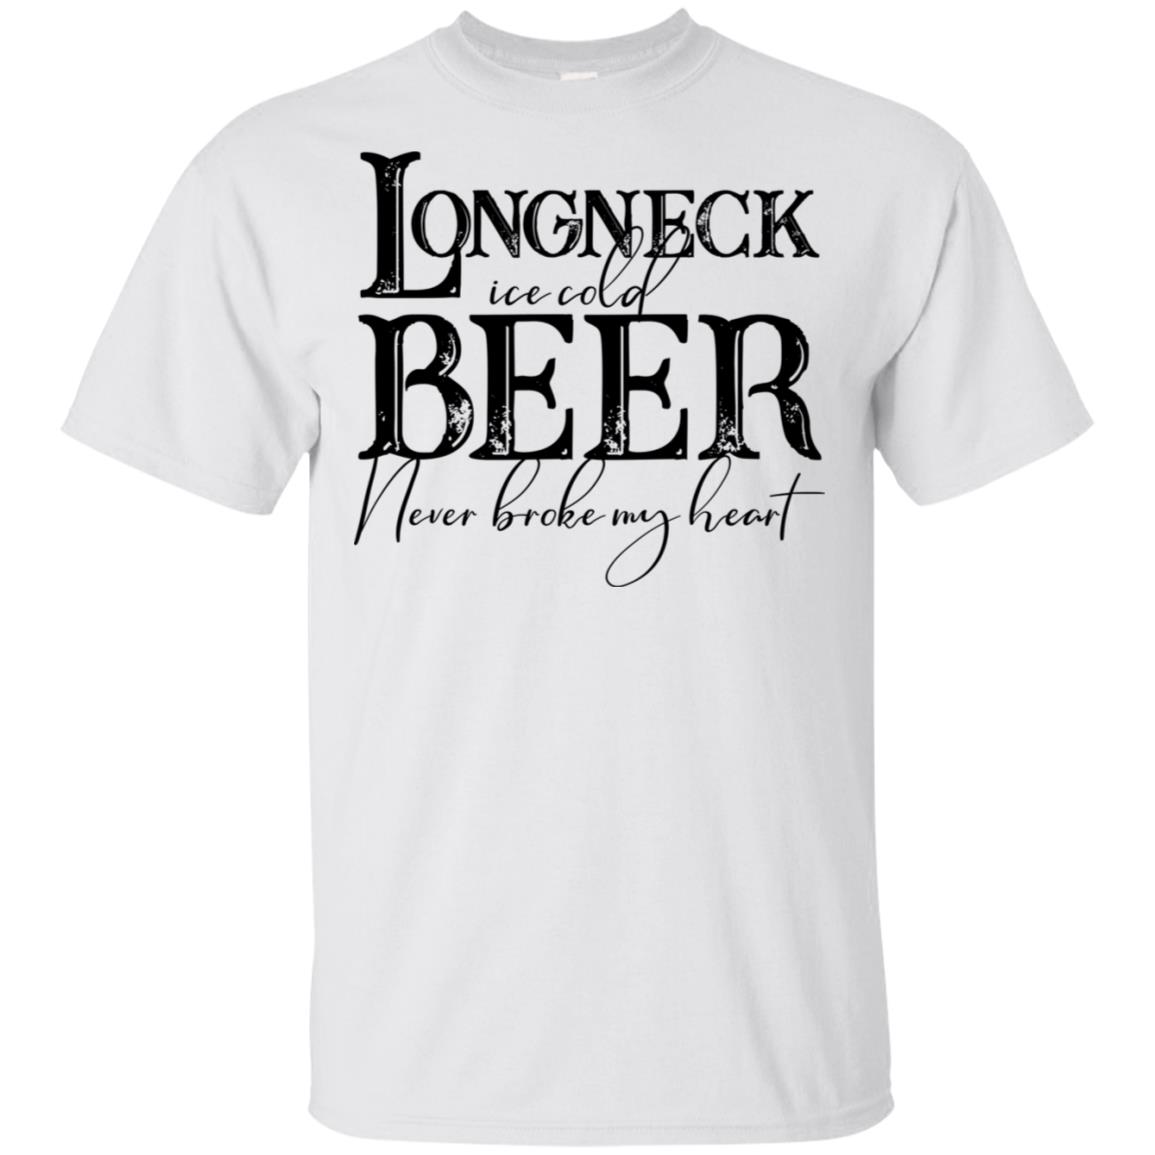 Longneck ice cold beer never broke my heart hoodie, t ...